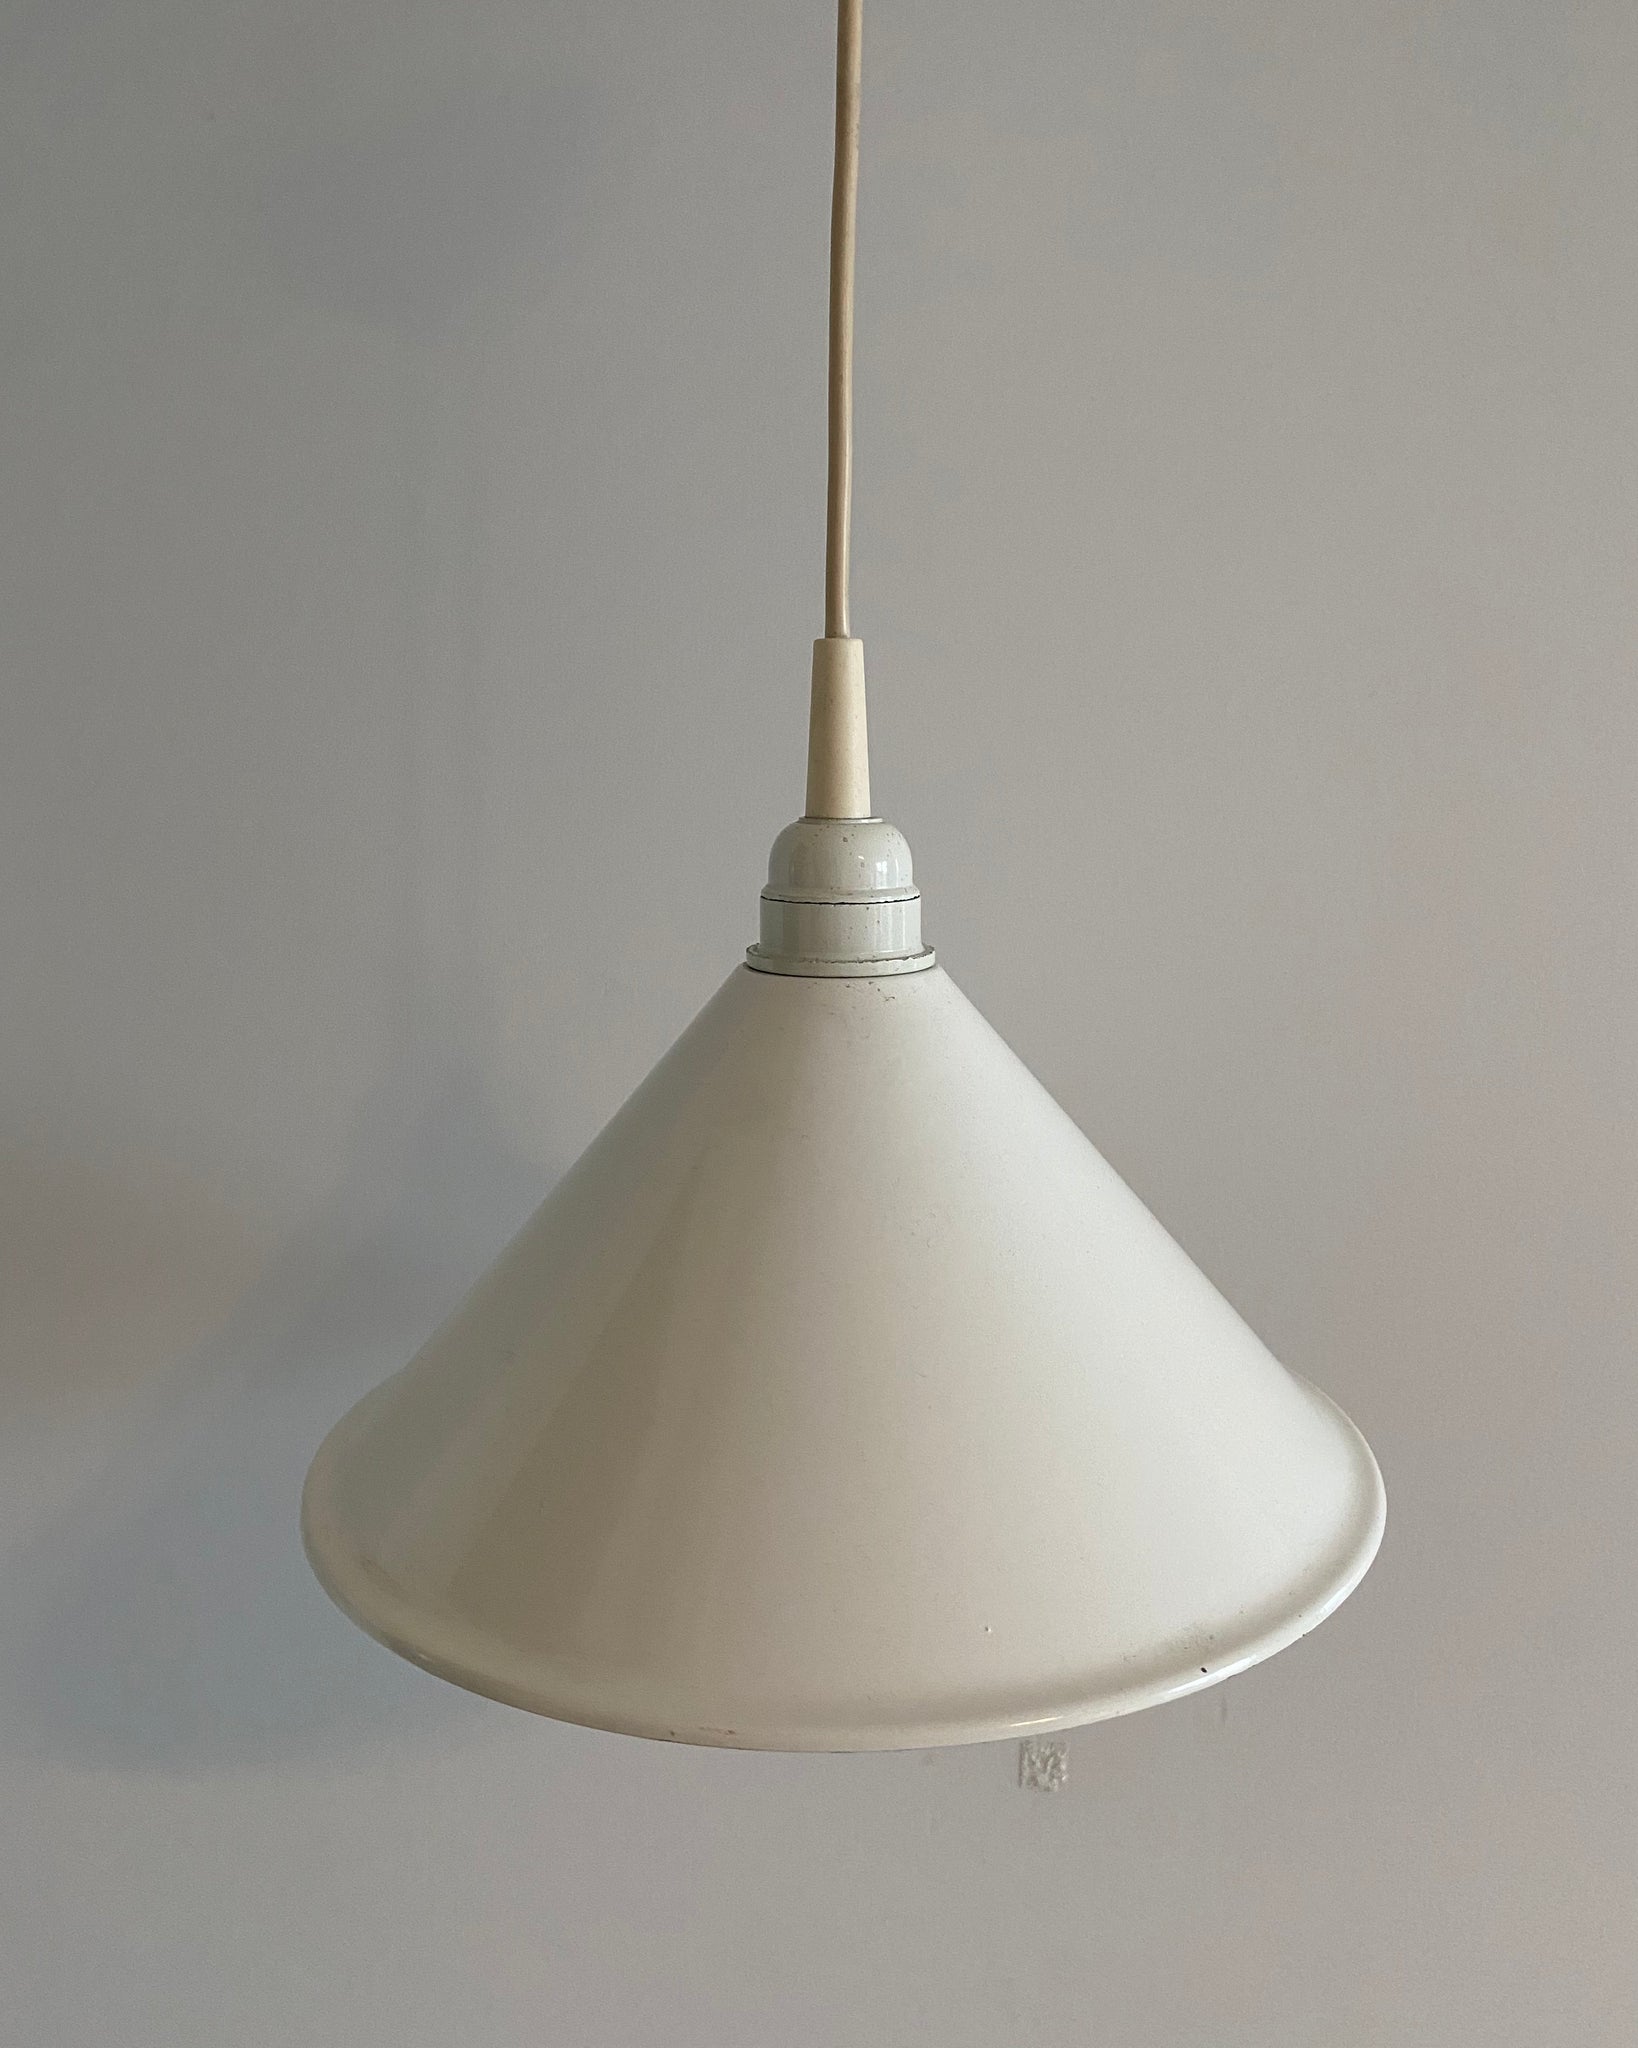 Almost white metal hanging lamp